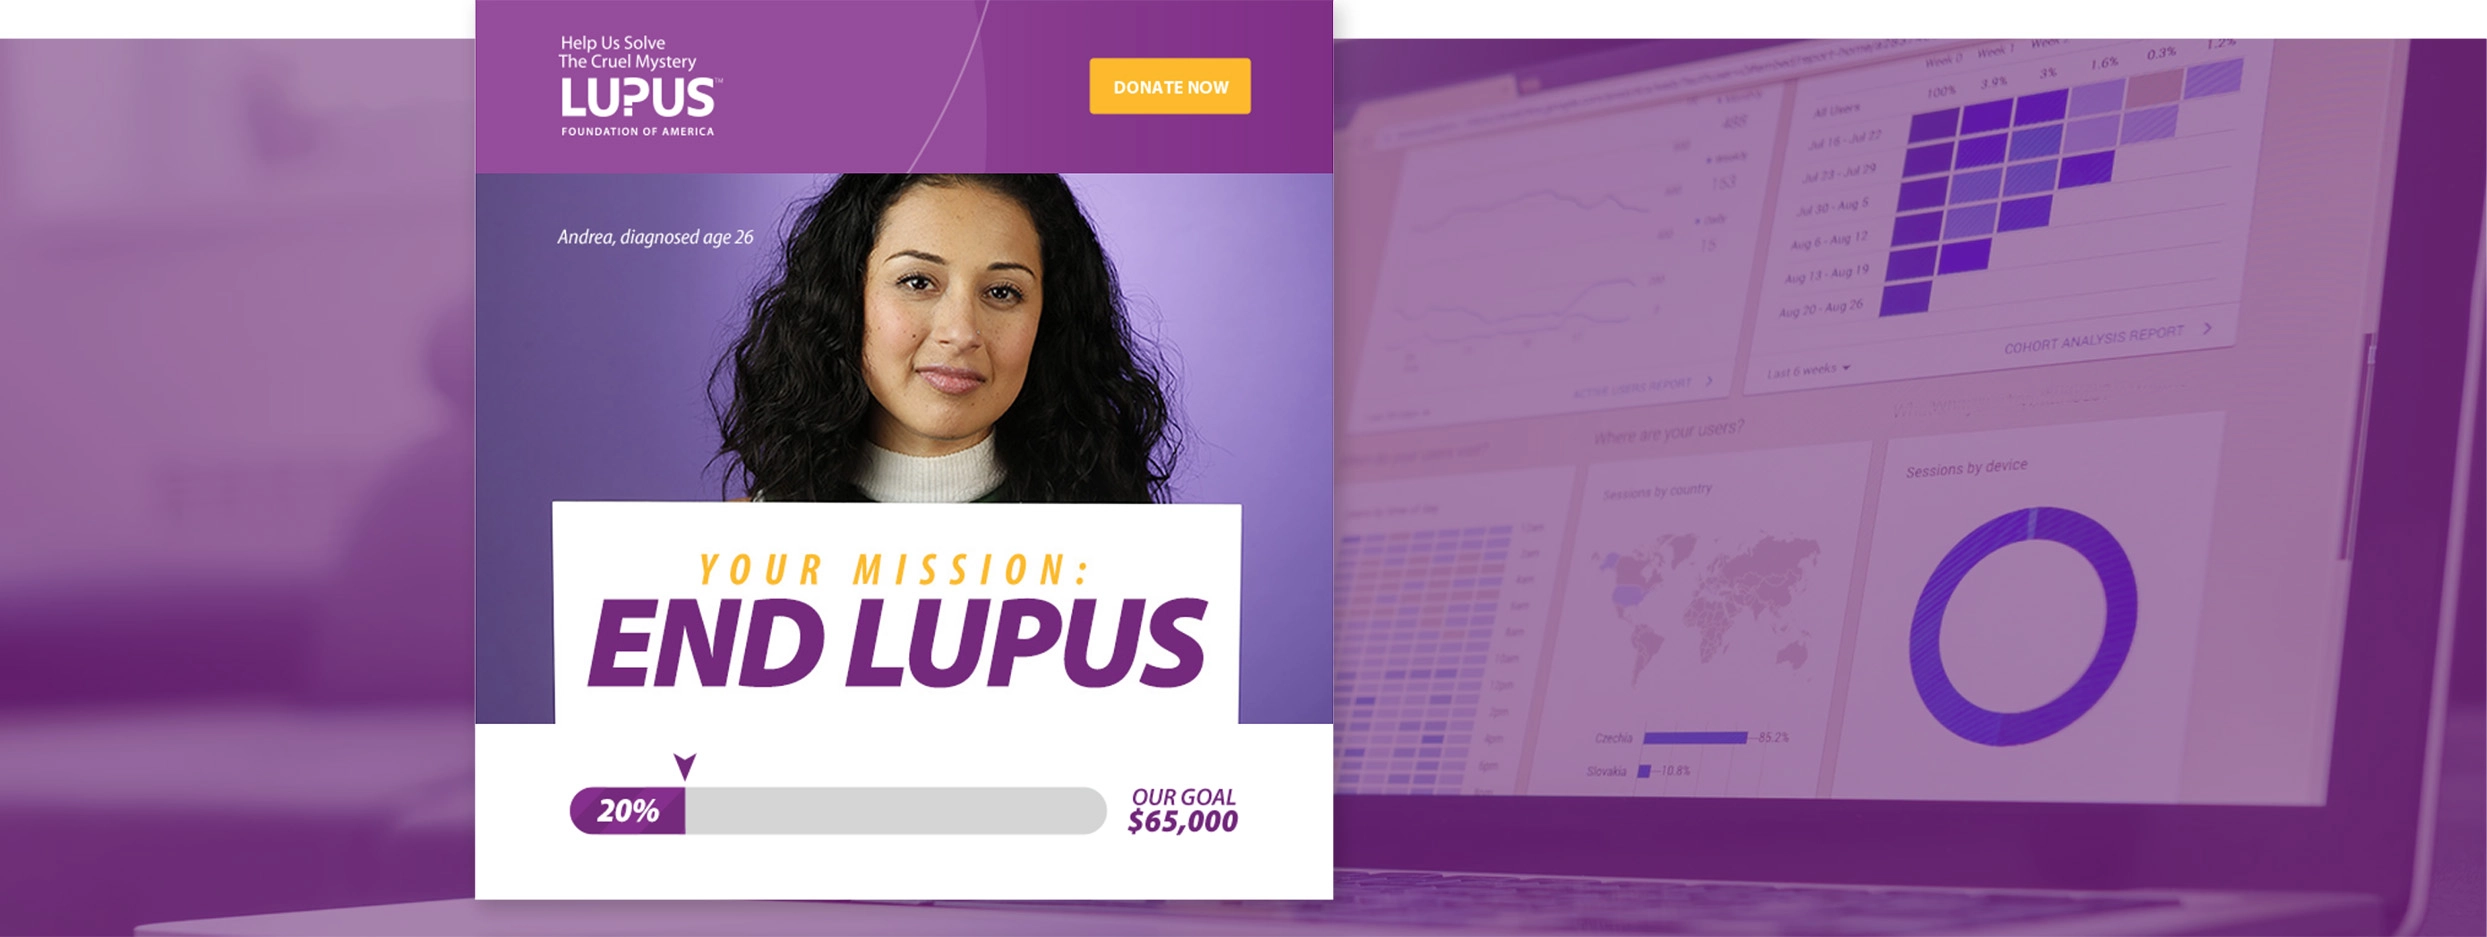 Lupus image panel 1